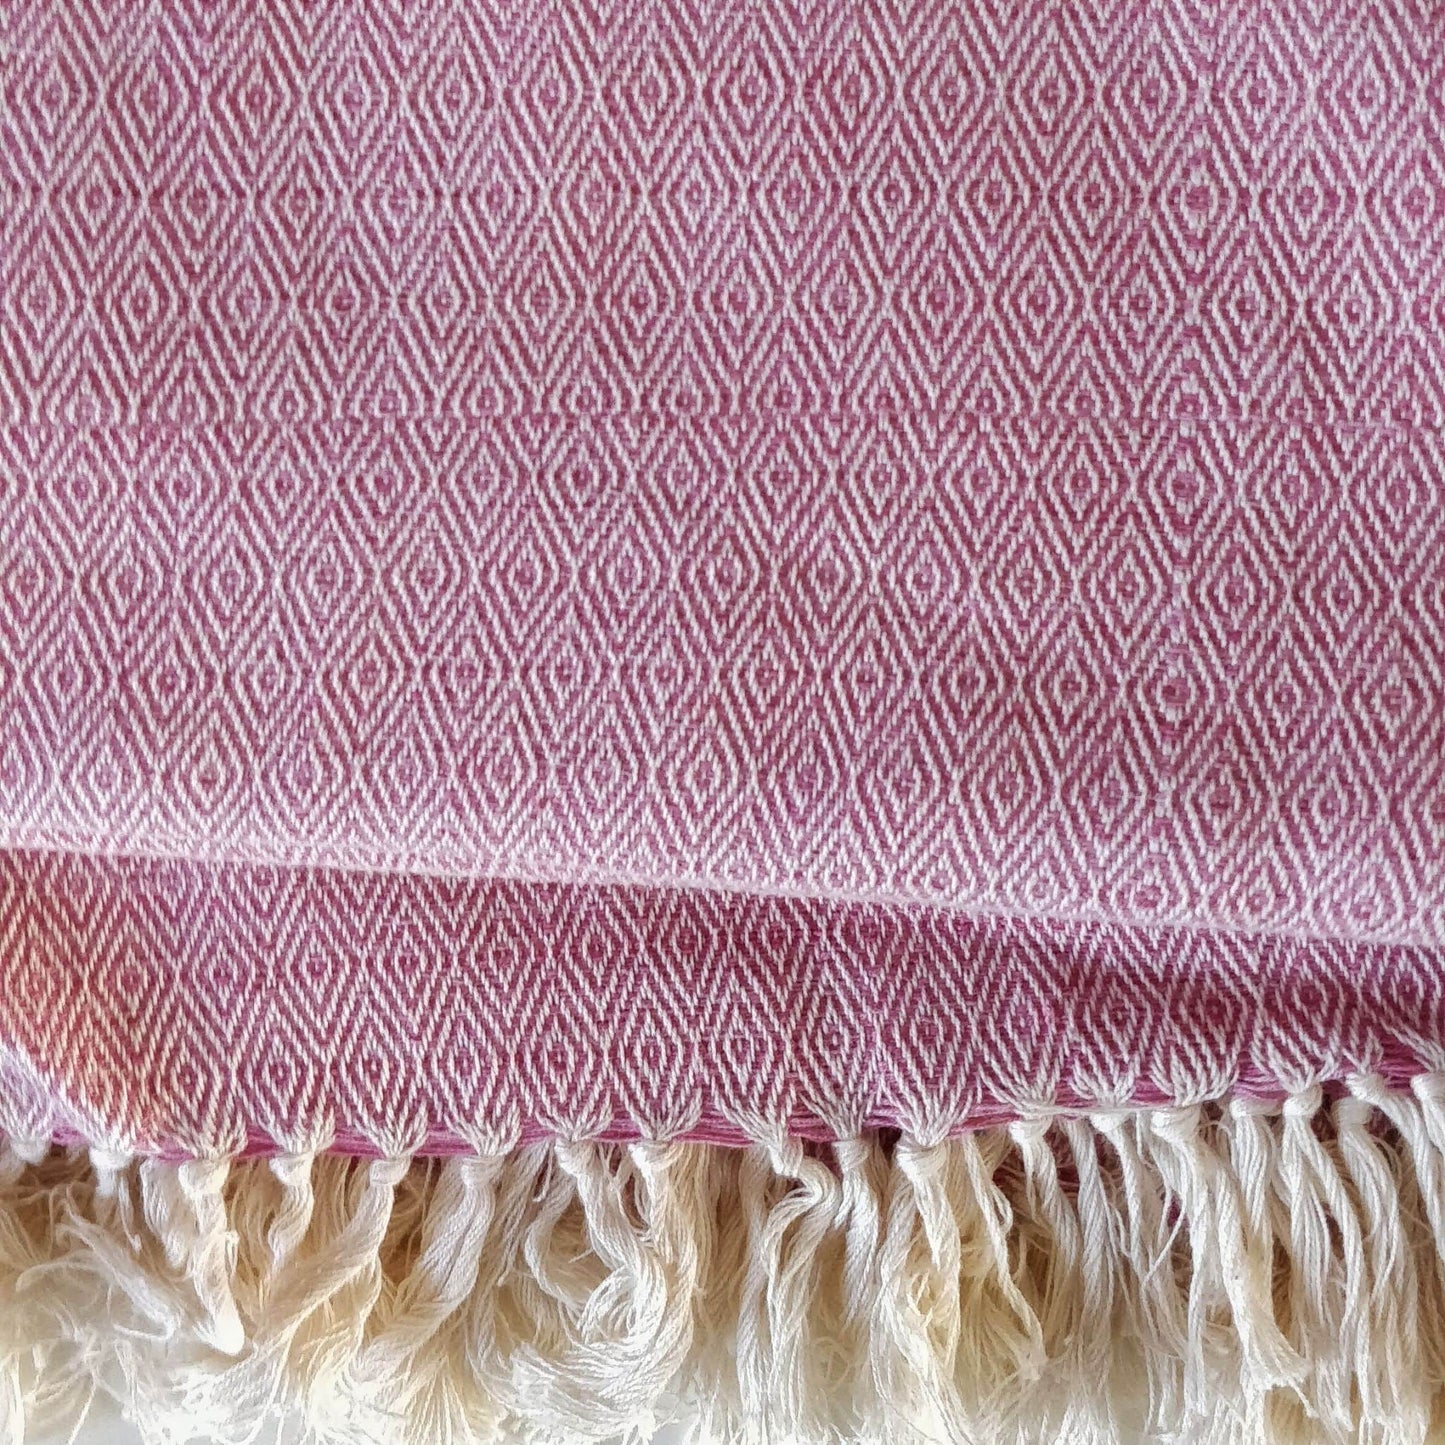 Fair Trade Hand Woven Big Blanket- pink